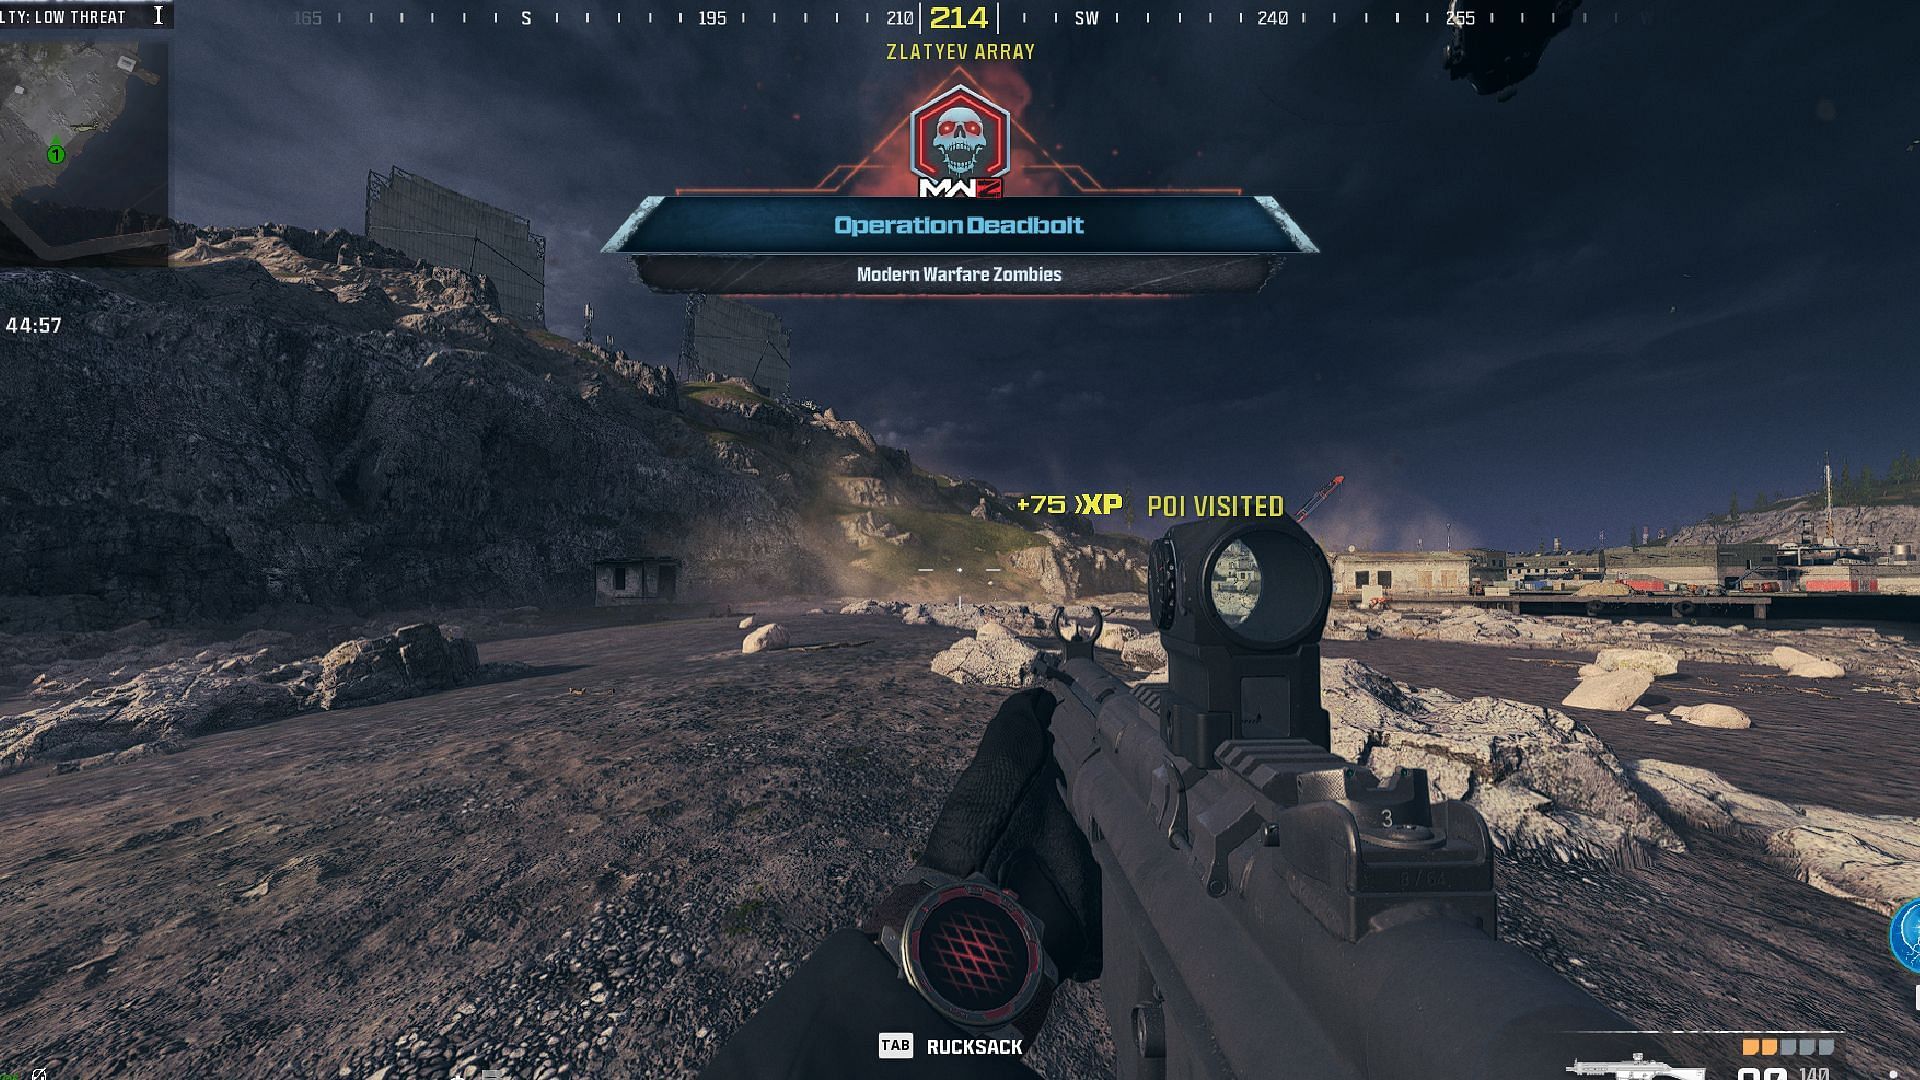 Modern Warfare 3 Zombies spawn area (Image via Activision)